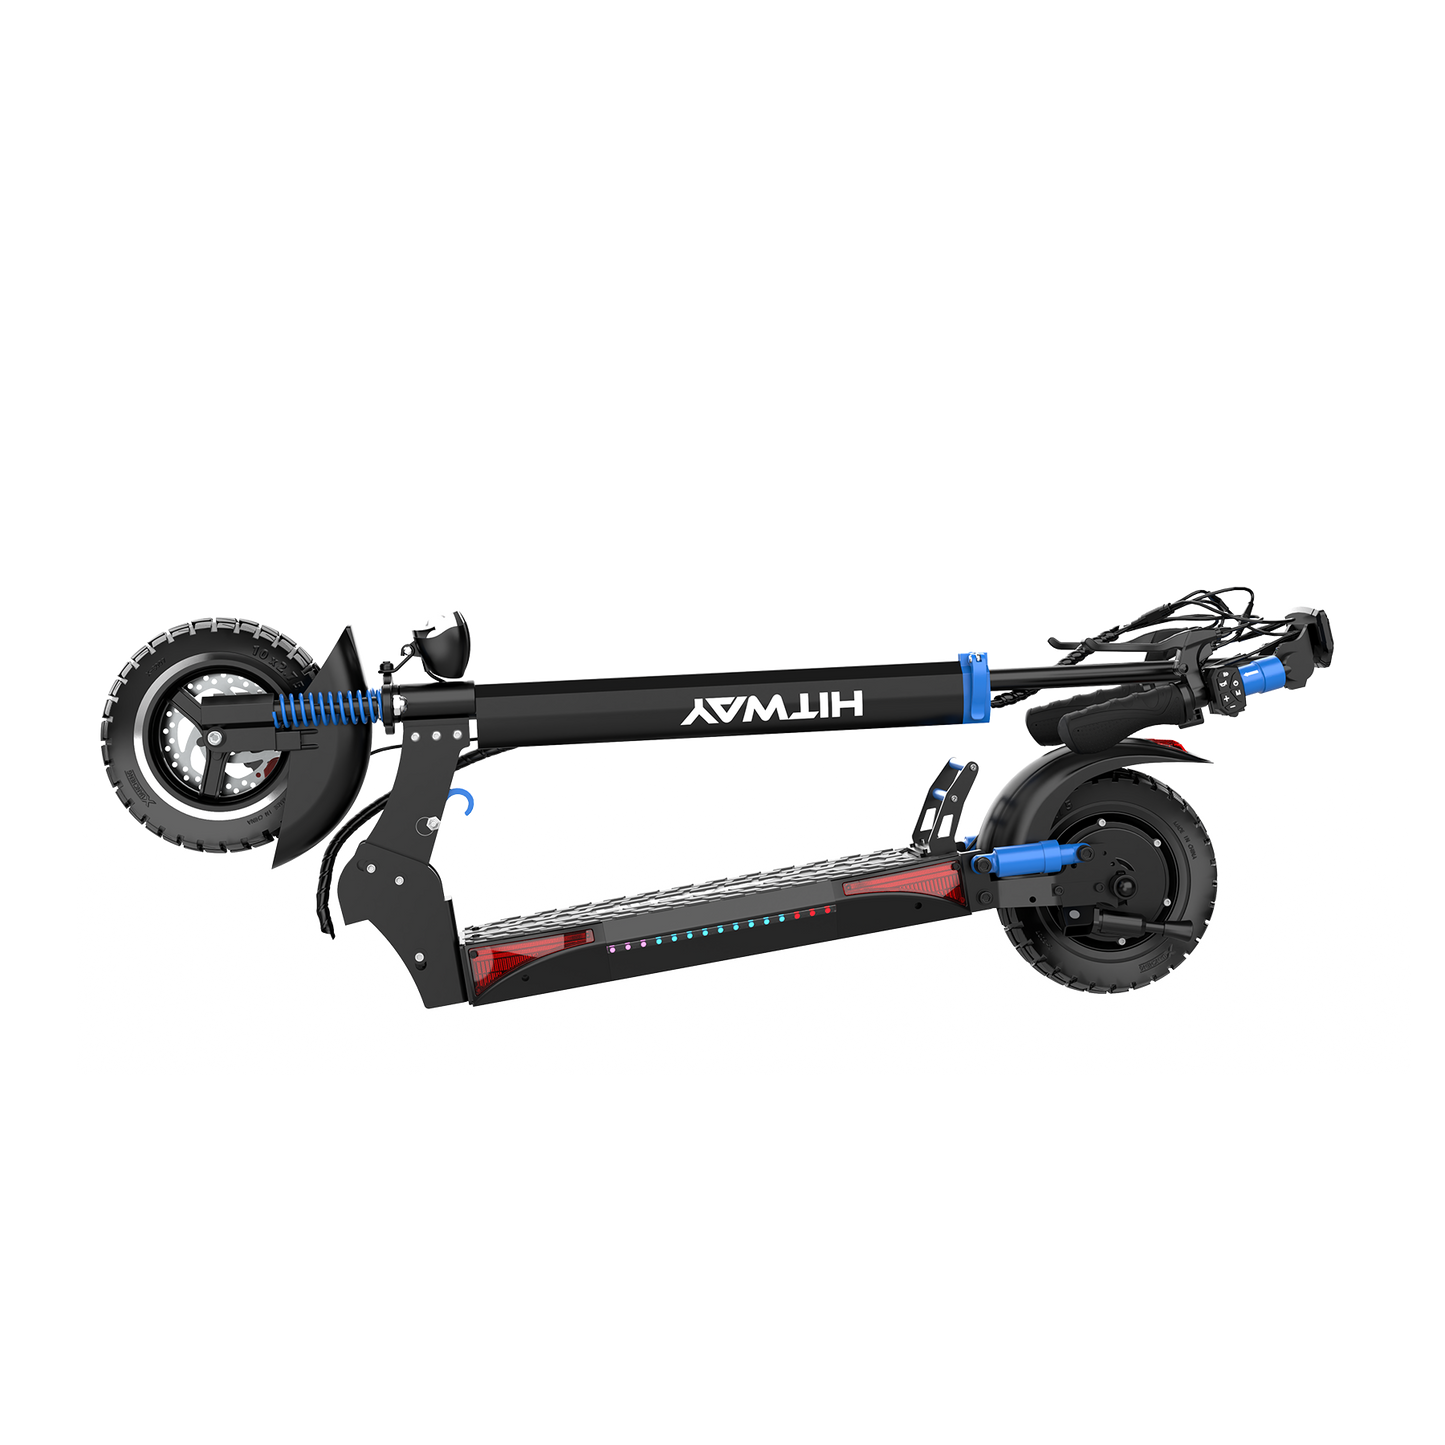 H9 Pro Elektro-Scooter